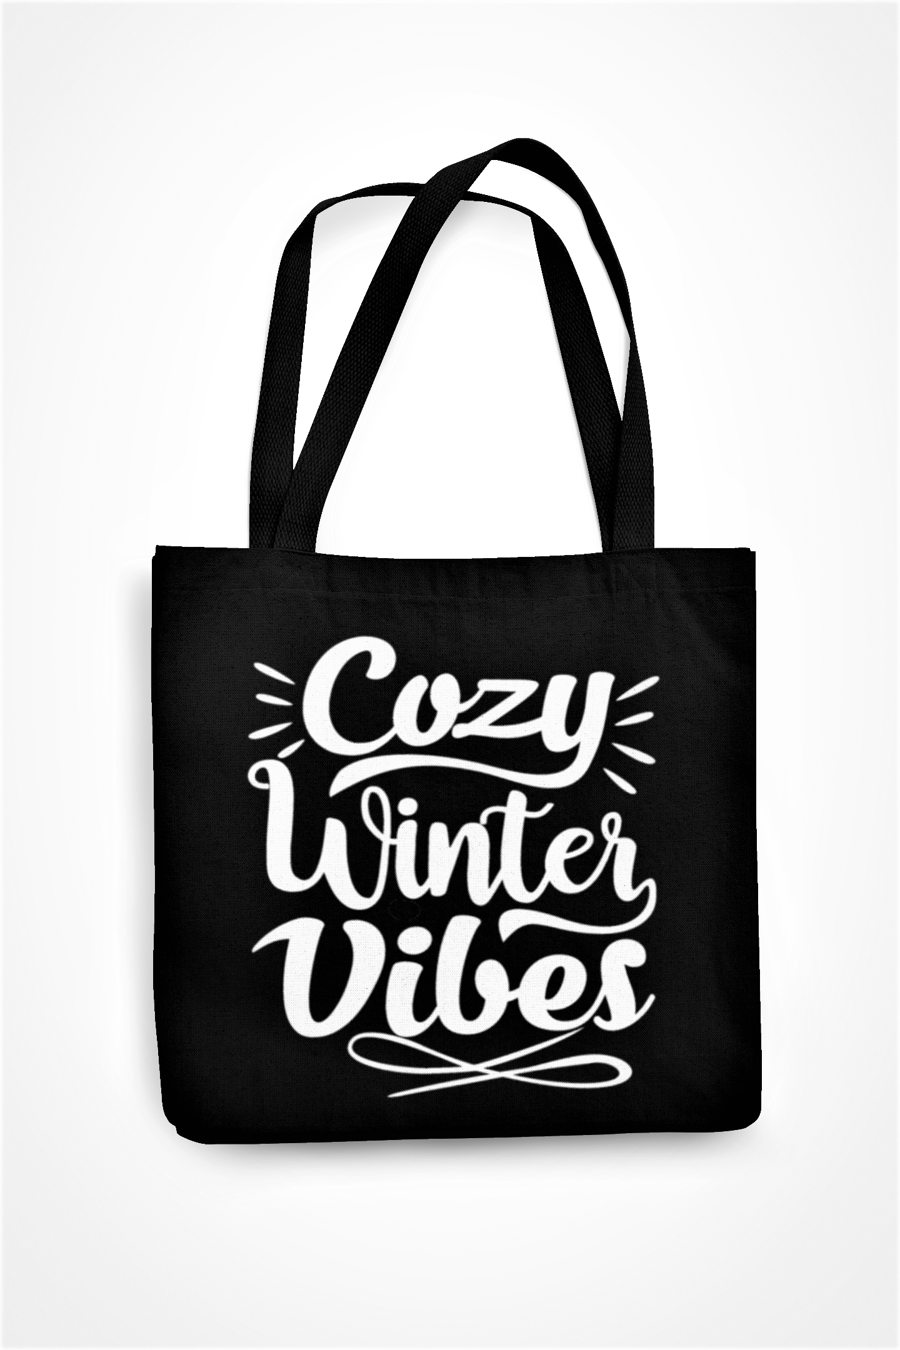 Cozy Winter VIBES  - Novelty Funny Christmas Tote Bag - Shopper Bag